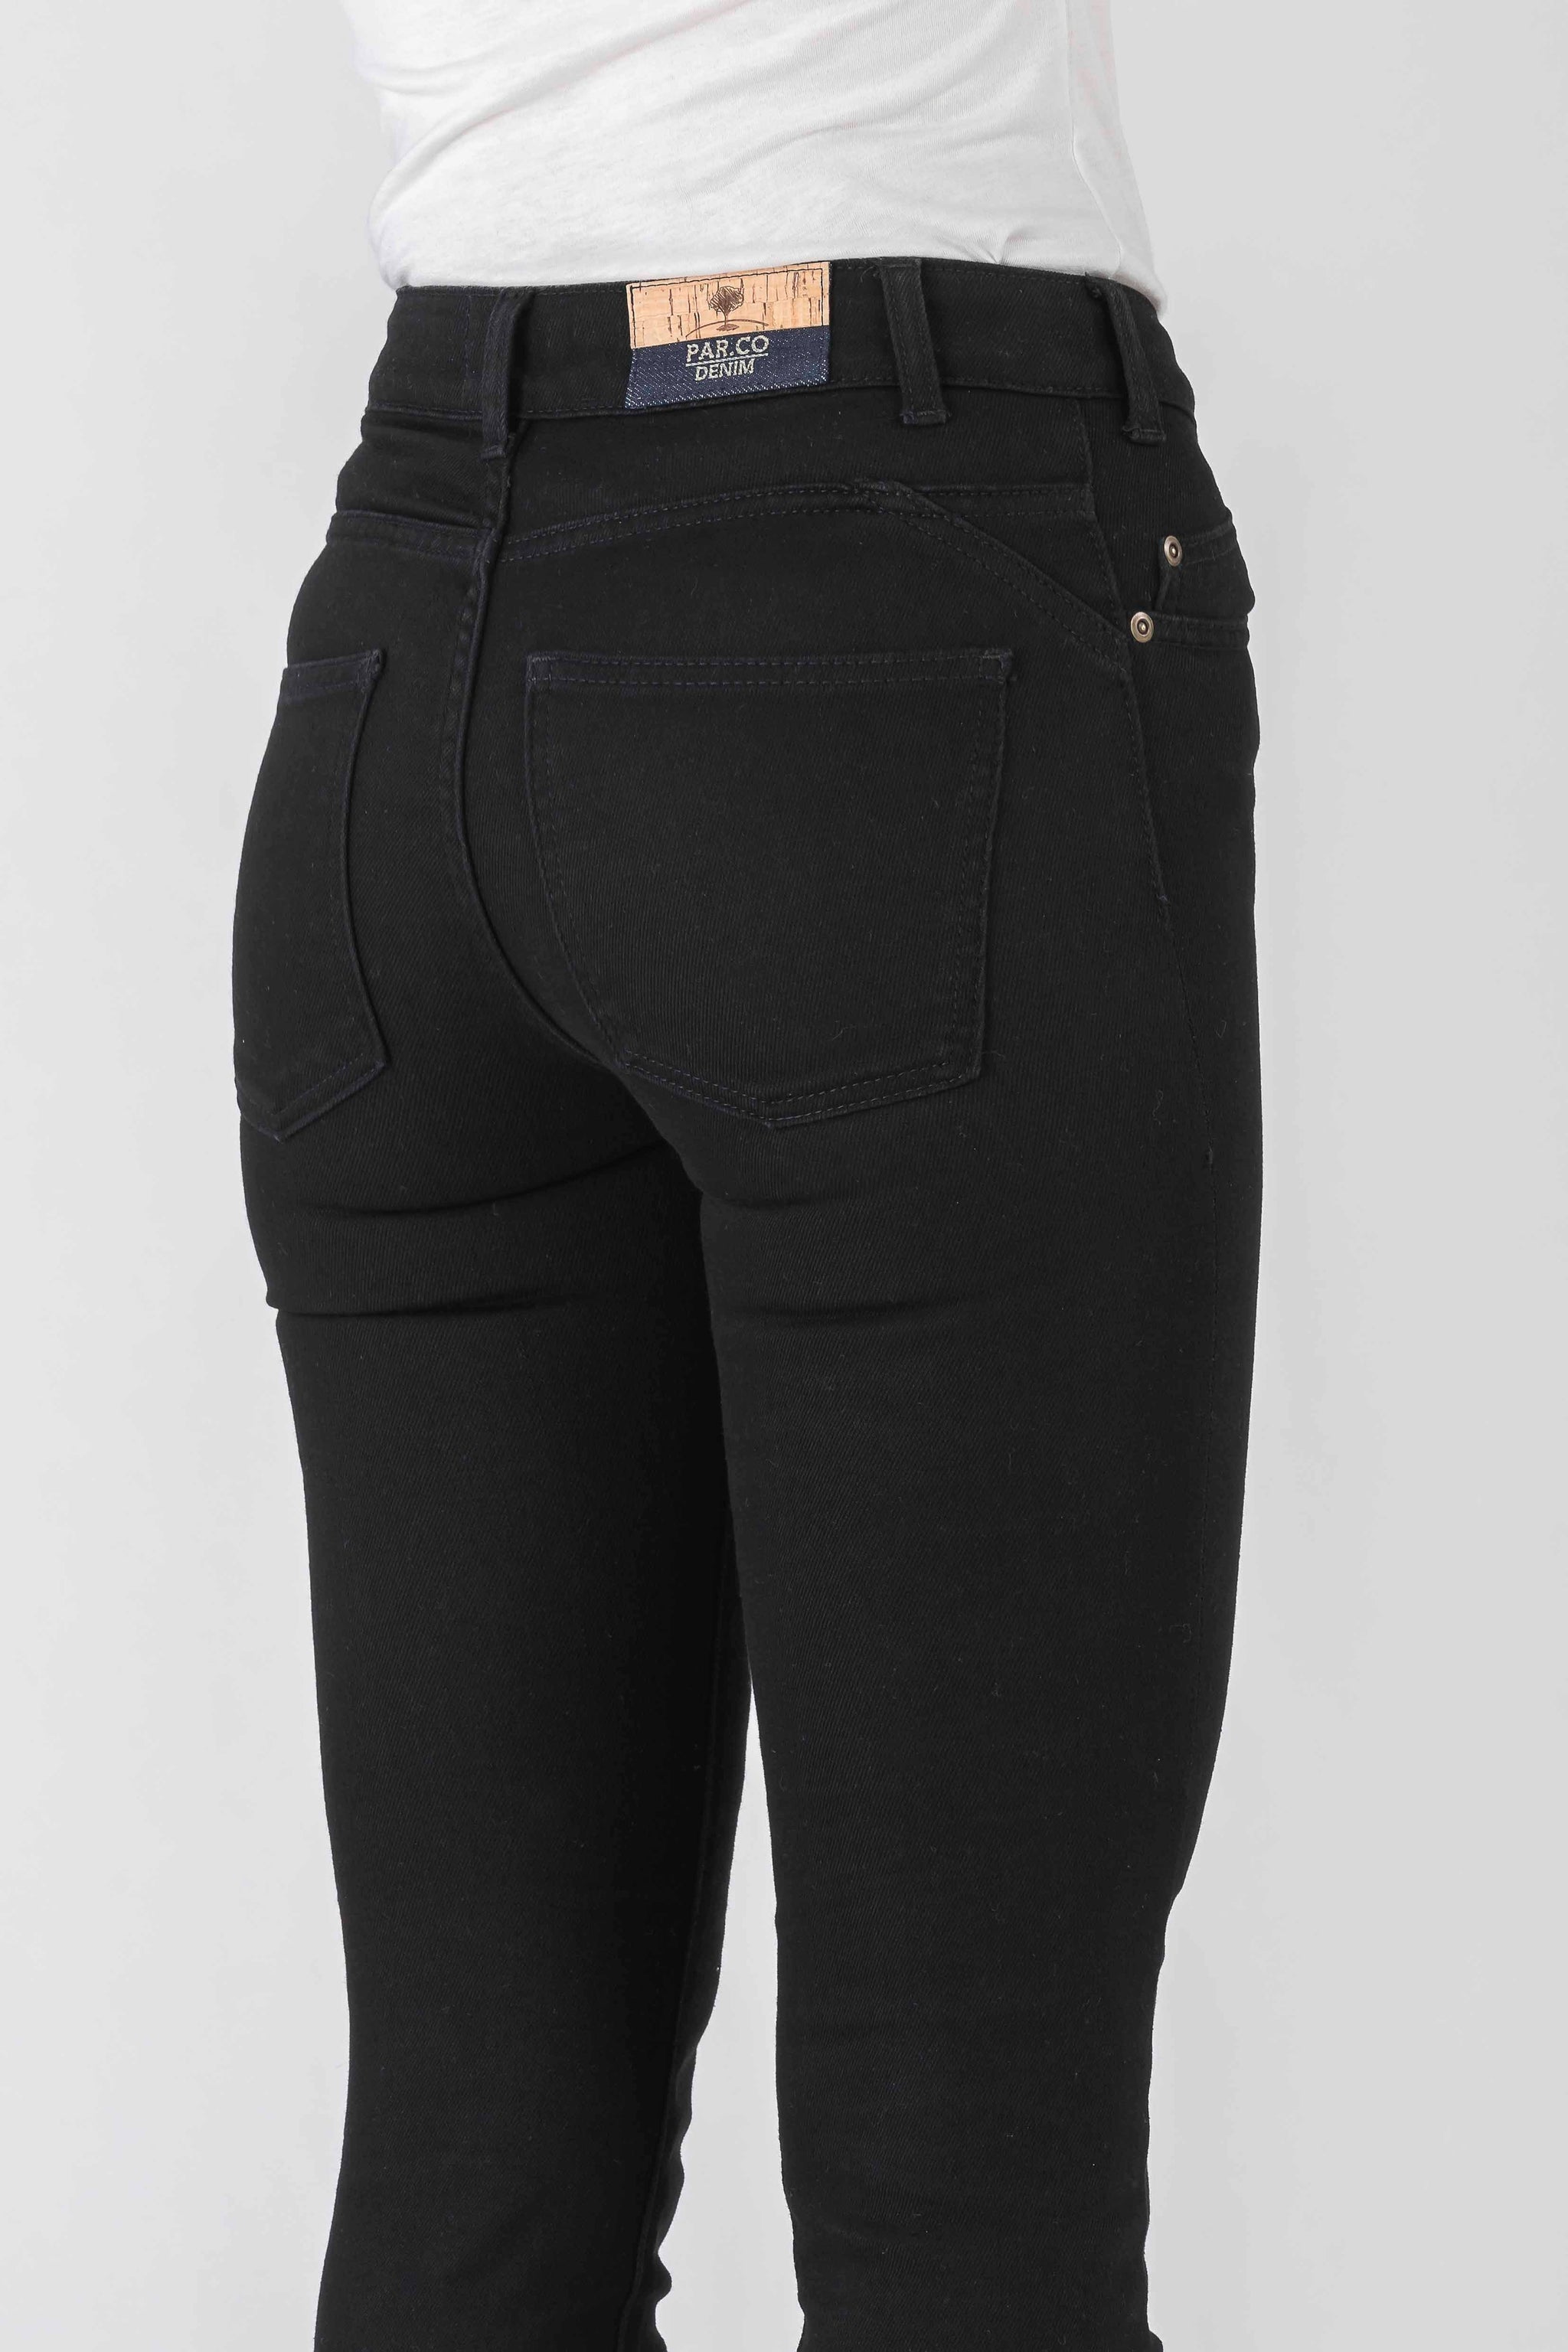 Par.co DENIM Woman Jeans Holly Black Slim Jeans bæredygtig modeetisk mode